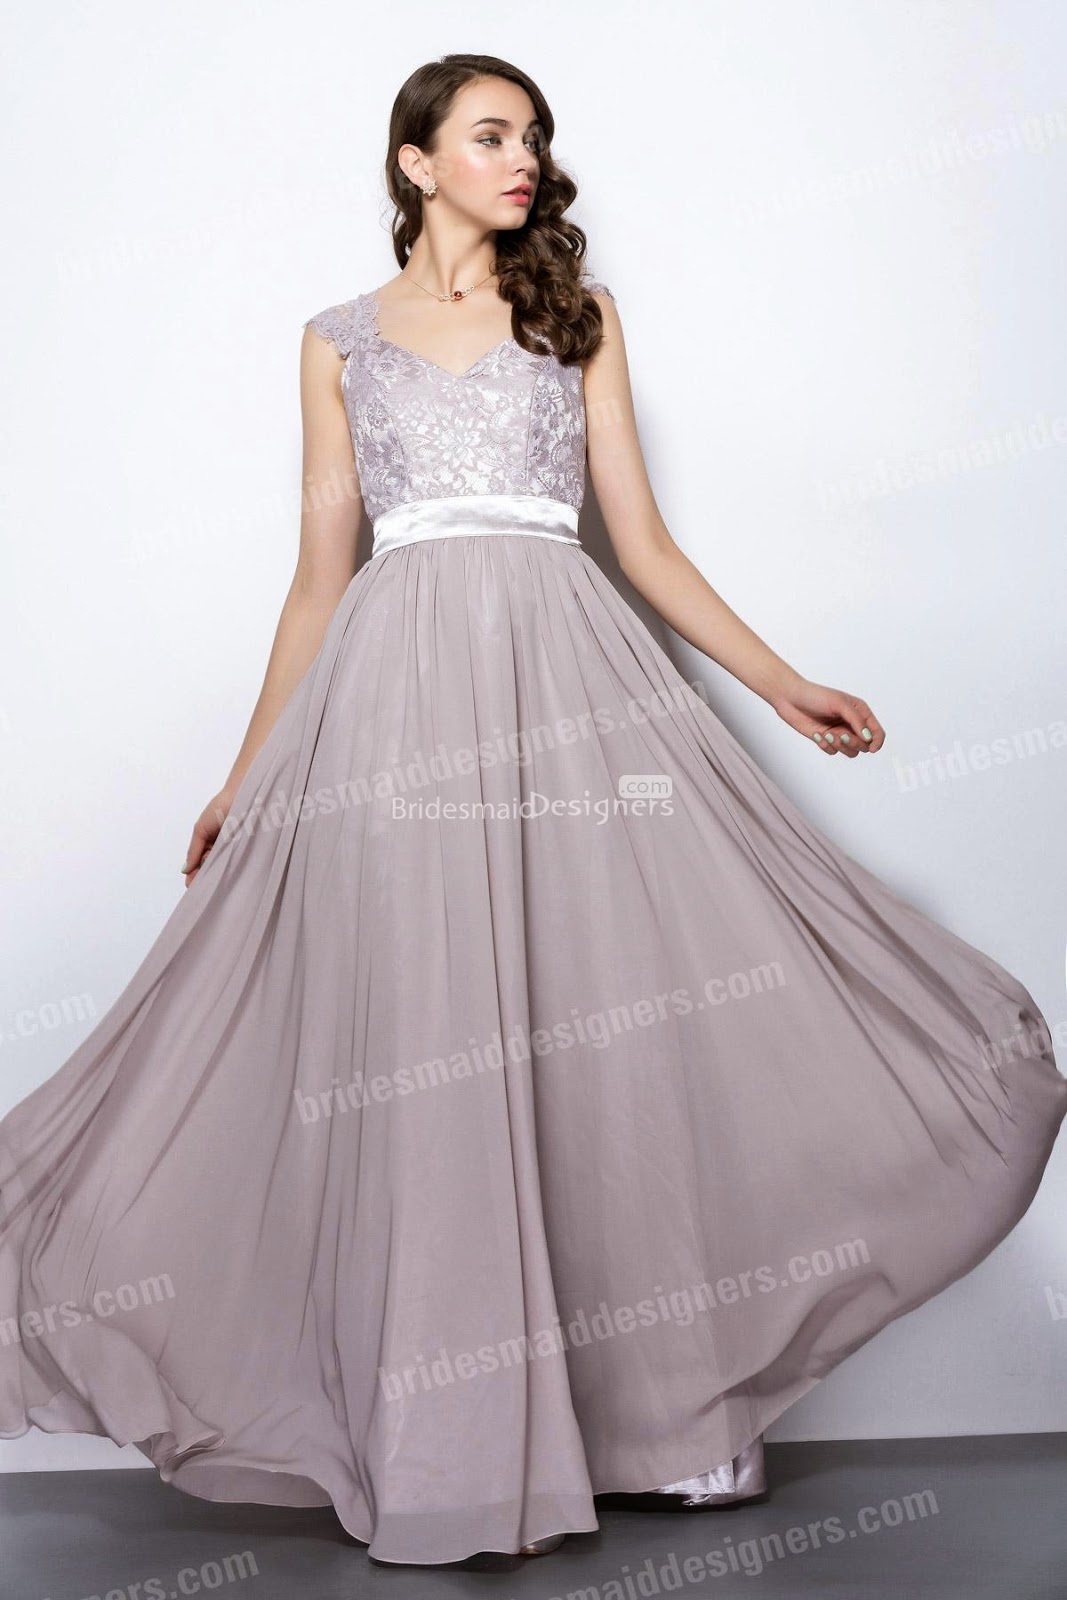 http://www.bridesmaiddesigners.com/v-neck-long-lace-applique-cap-sleeve-chiffon-bridesmaid-dress-1058.html